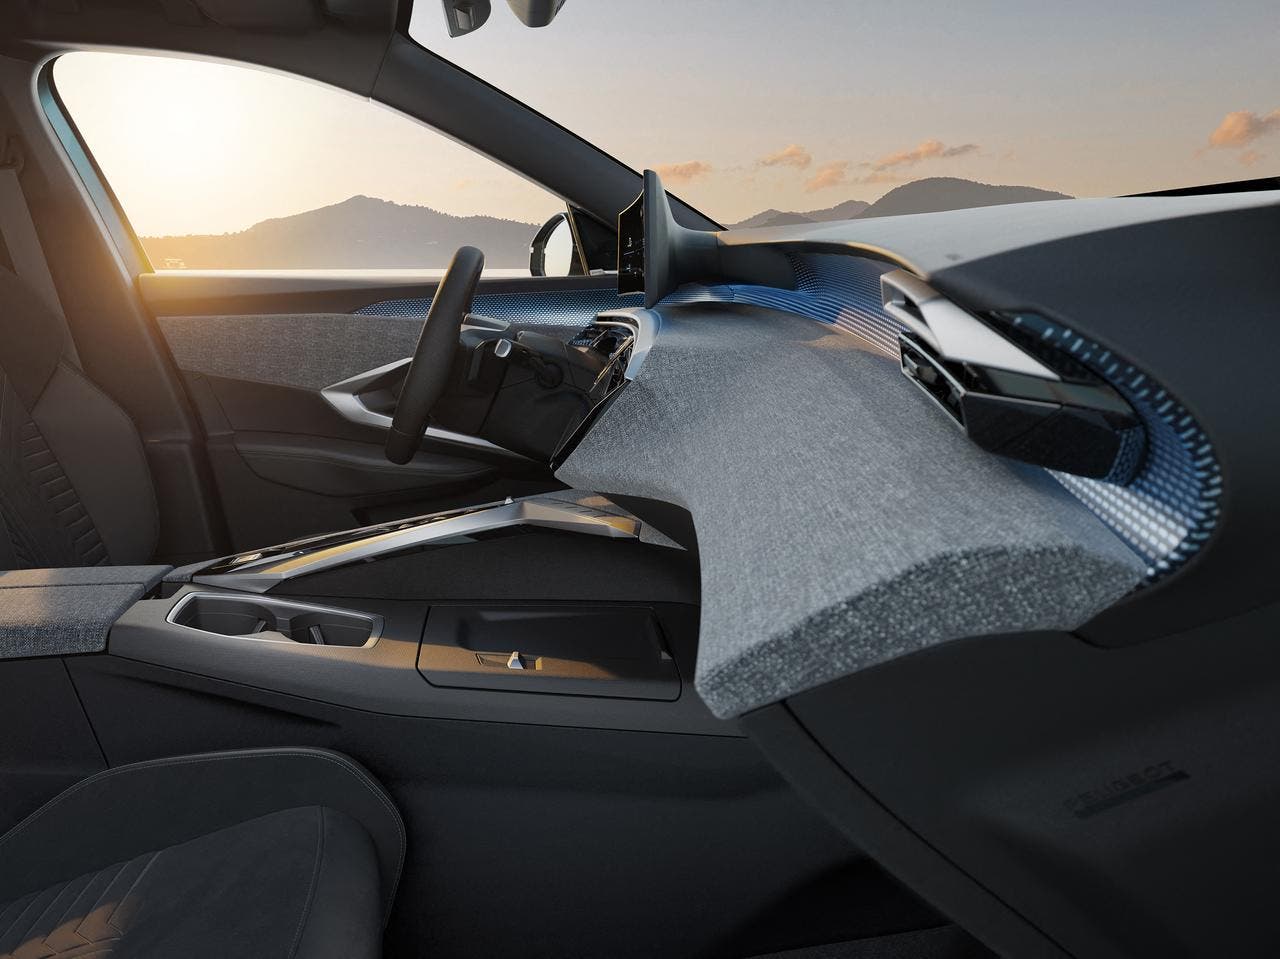 Peugeot panoramic i-Cockpit